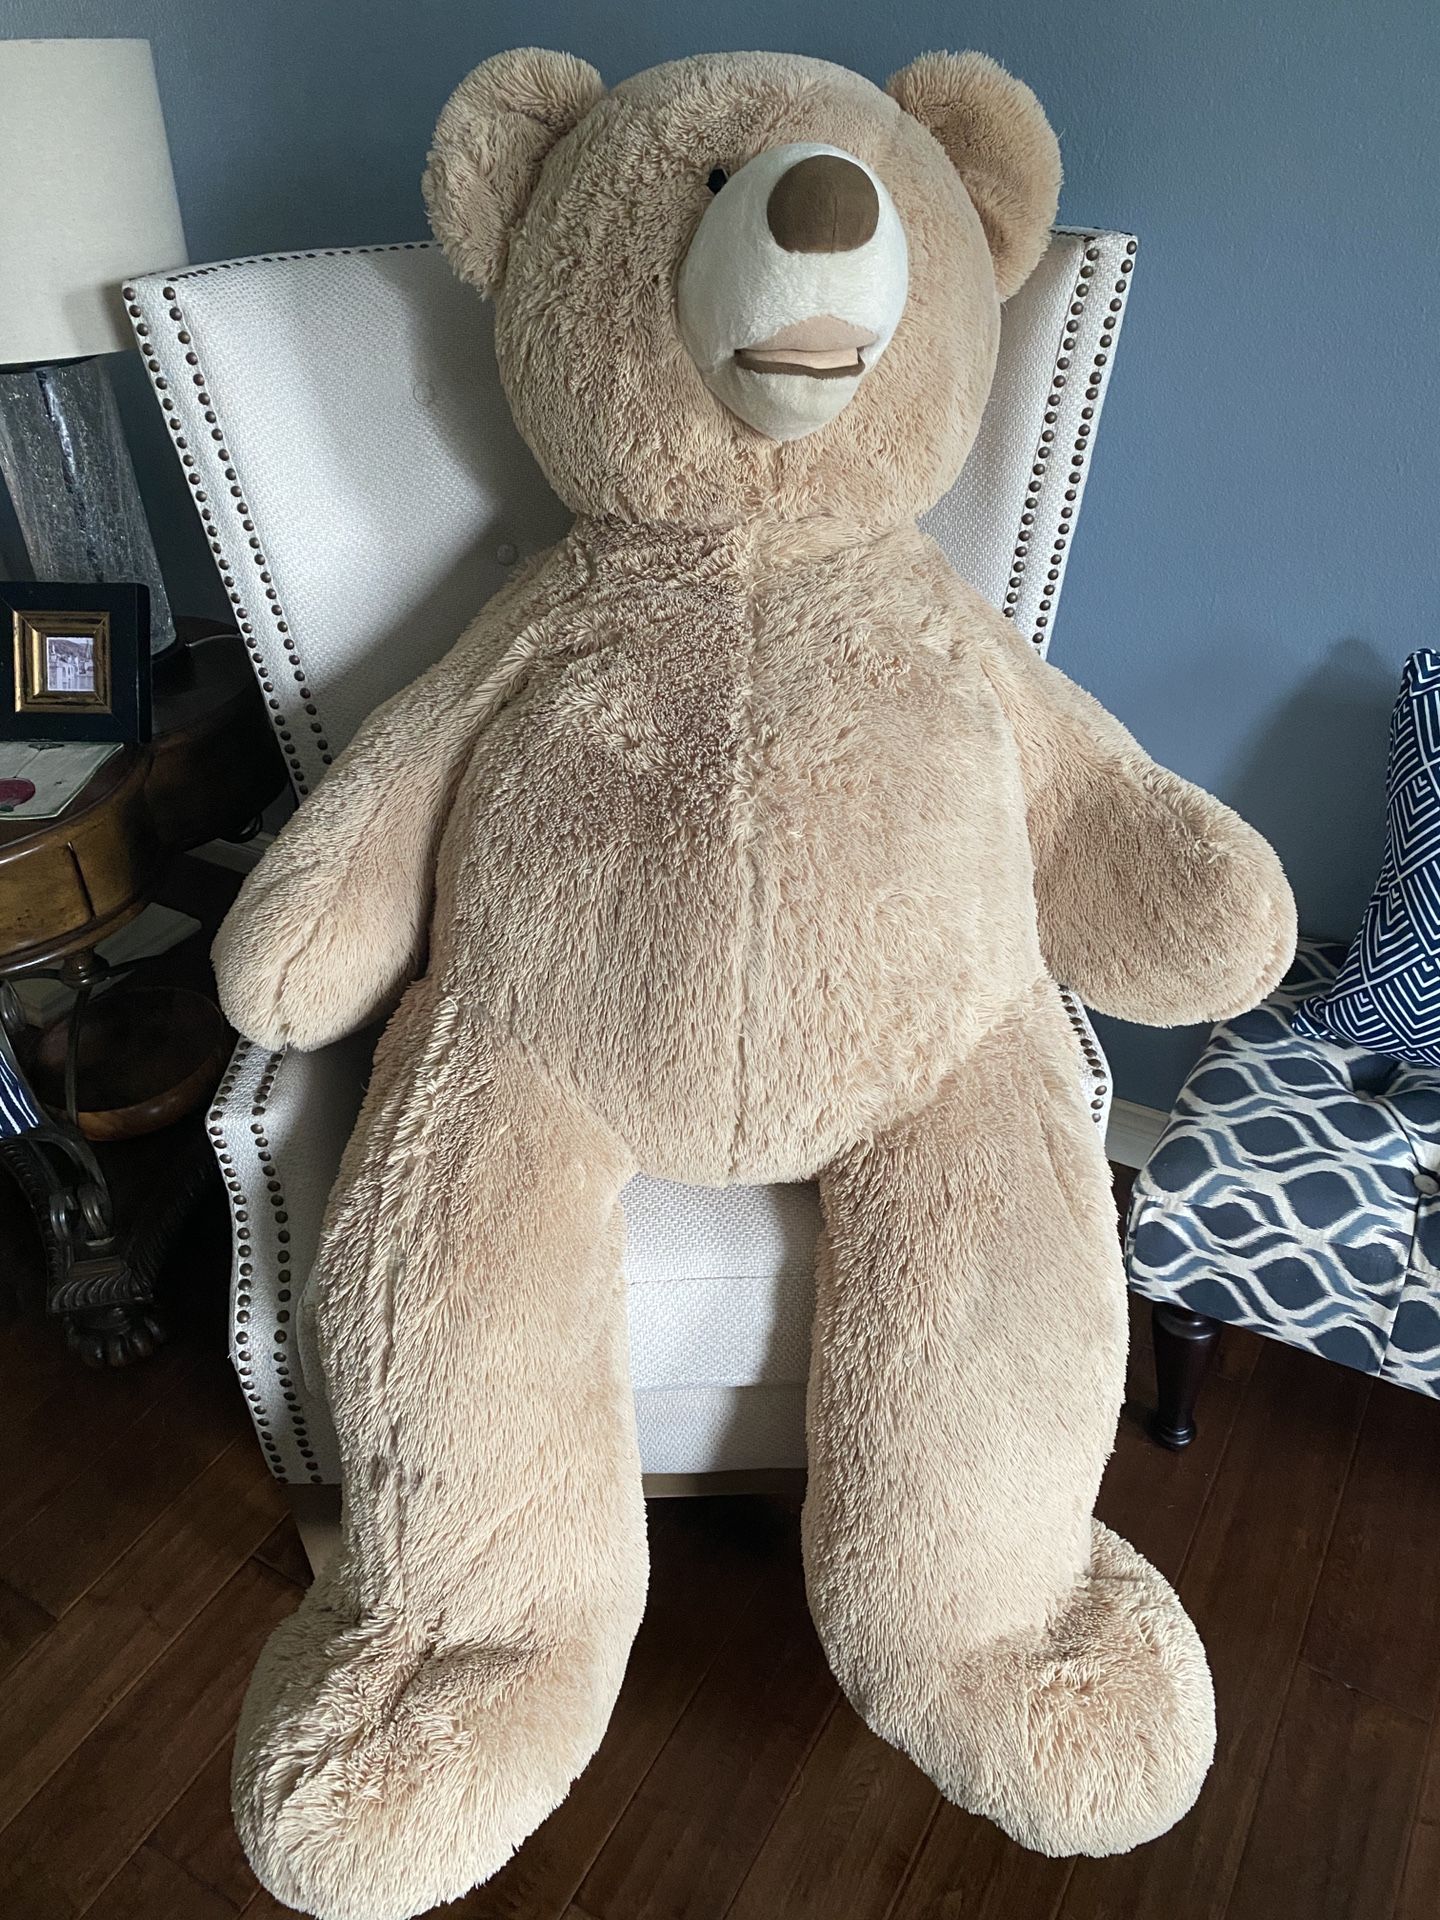 Giant Costco teddy bear